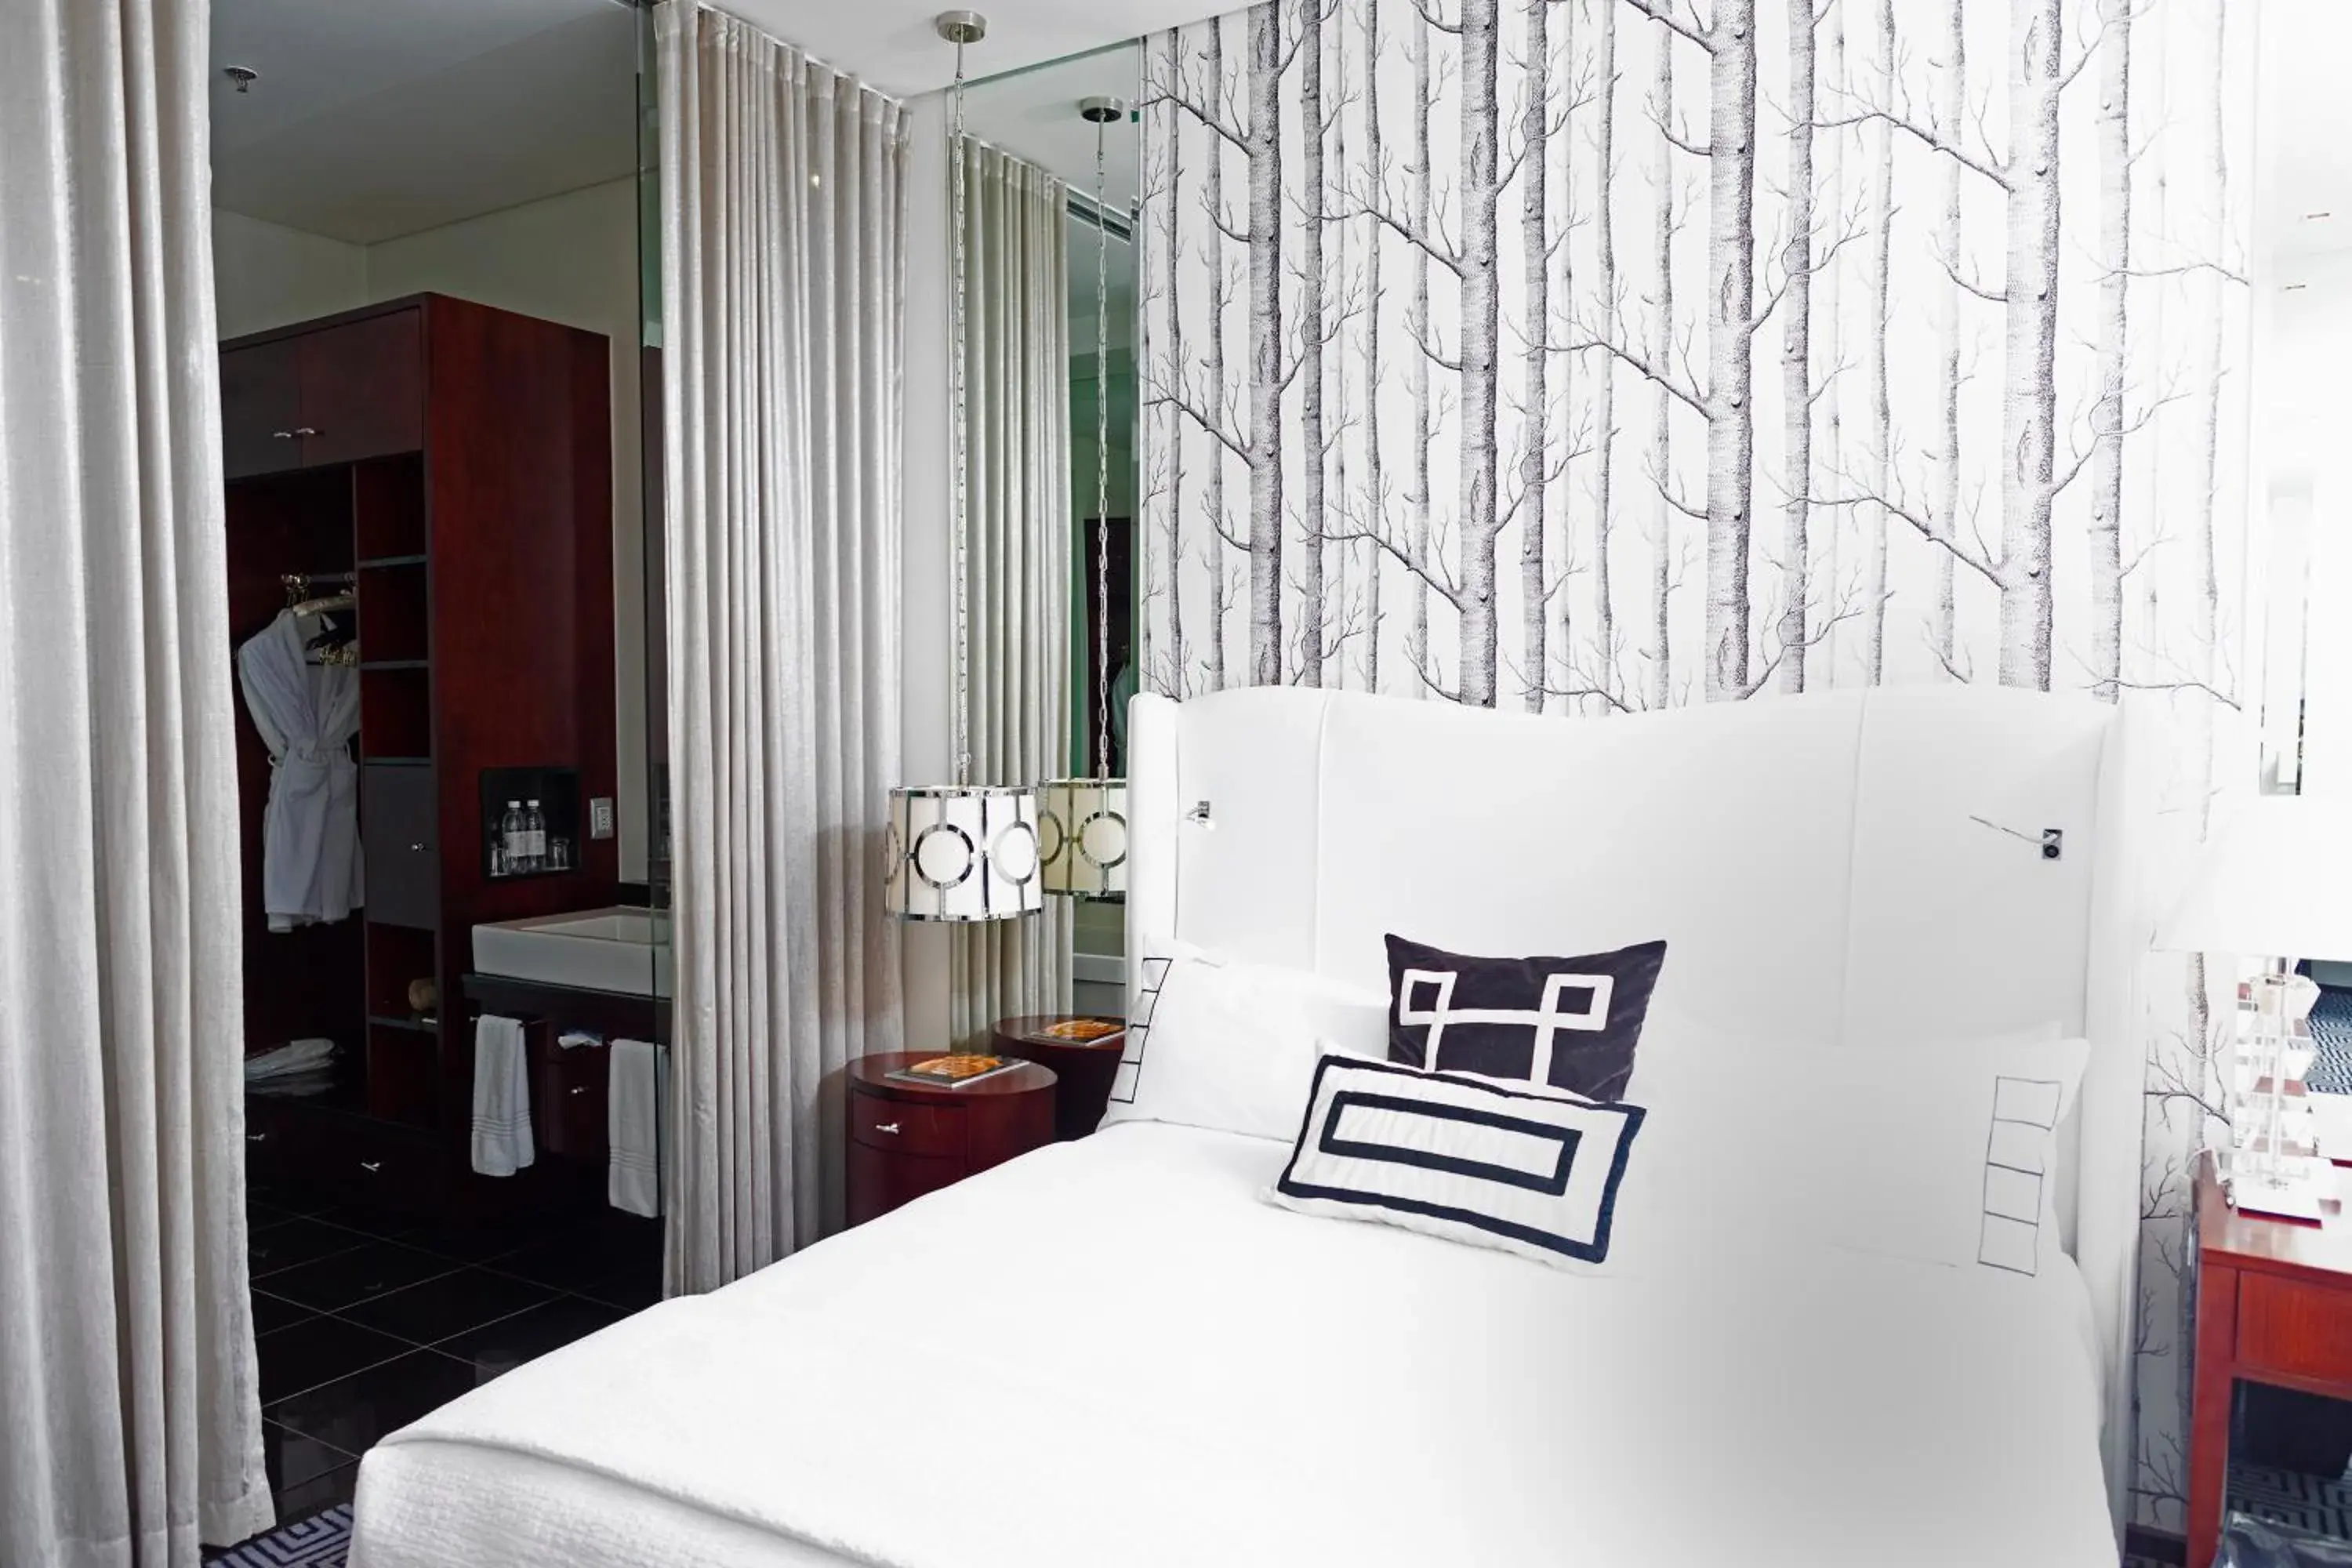 Bed in DAVINCI Hotel on Nelson Mandela Square